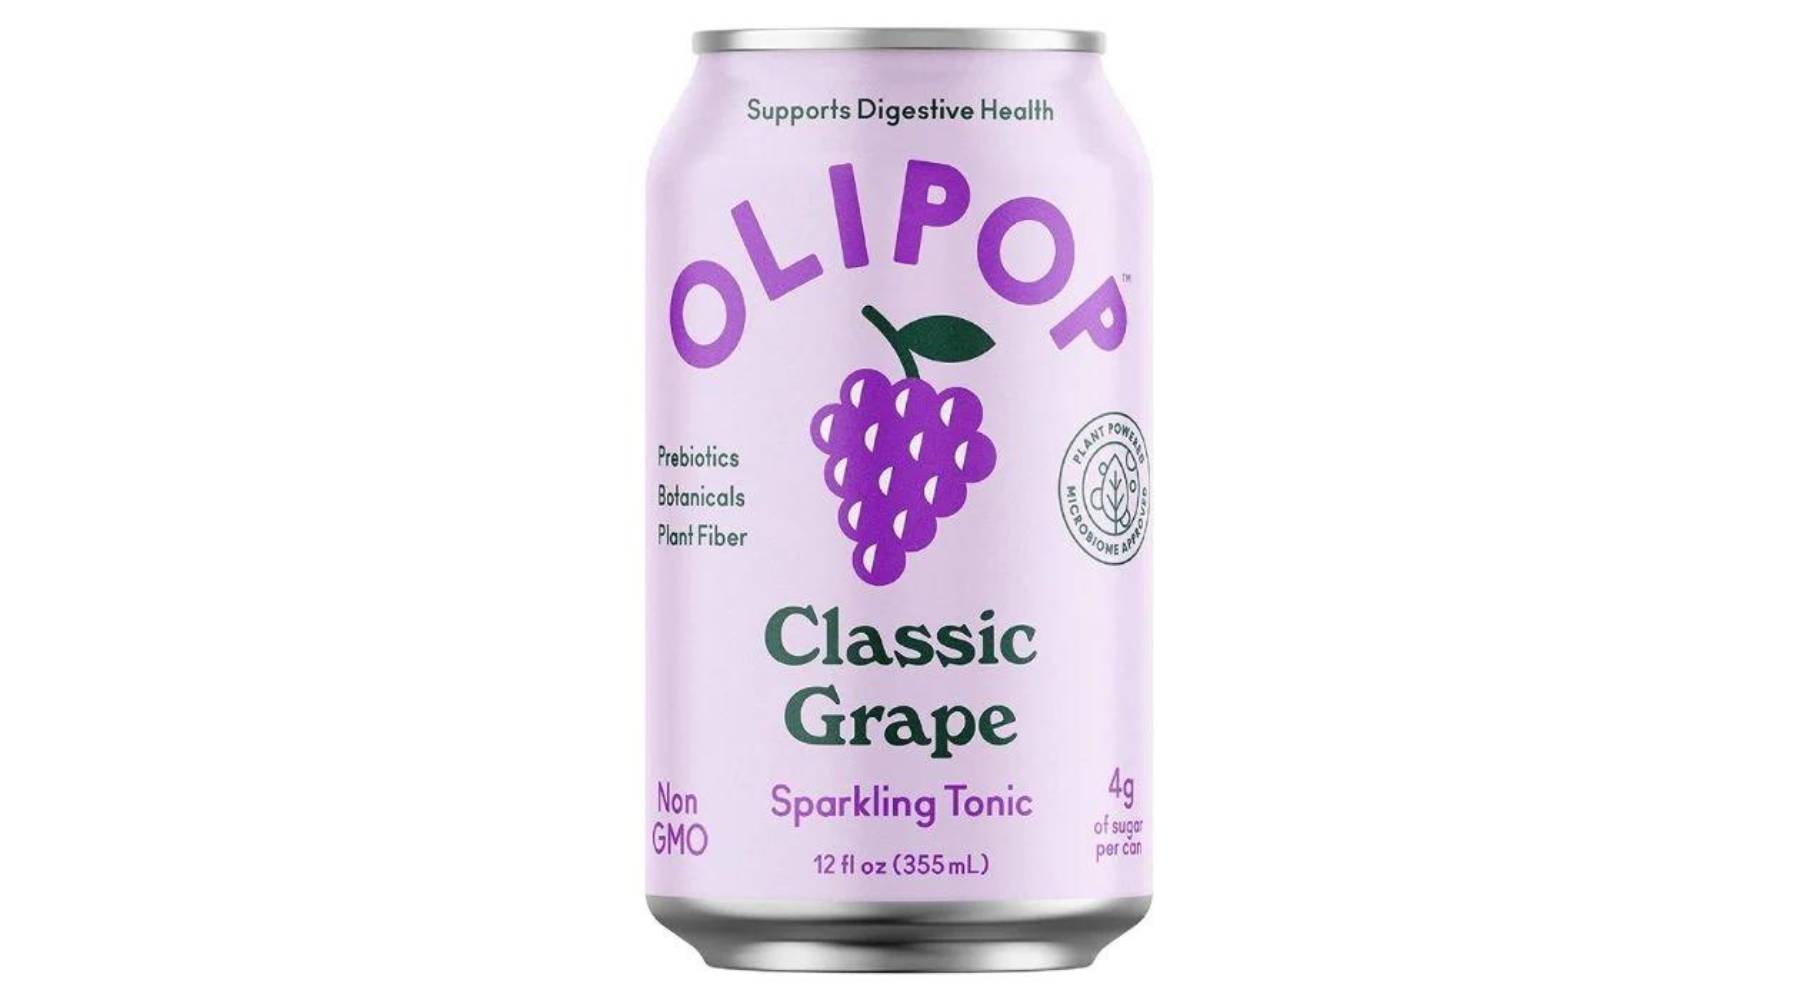 Olipop - Prebiotic Sparkling Tonic Drinks, 355ml Multiple Flavours